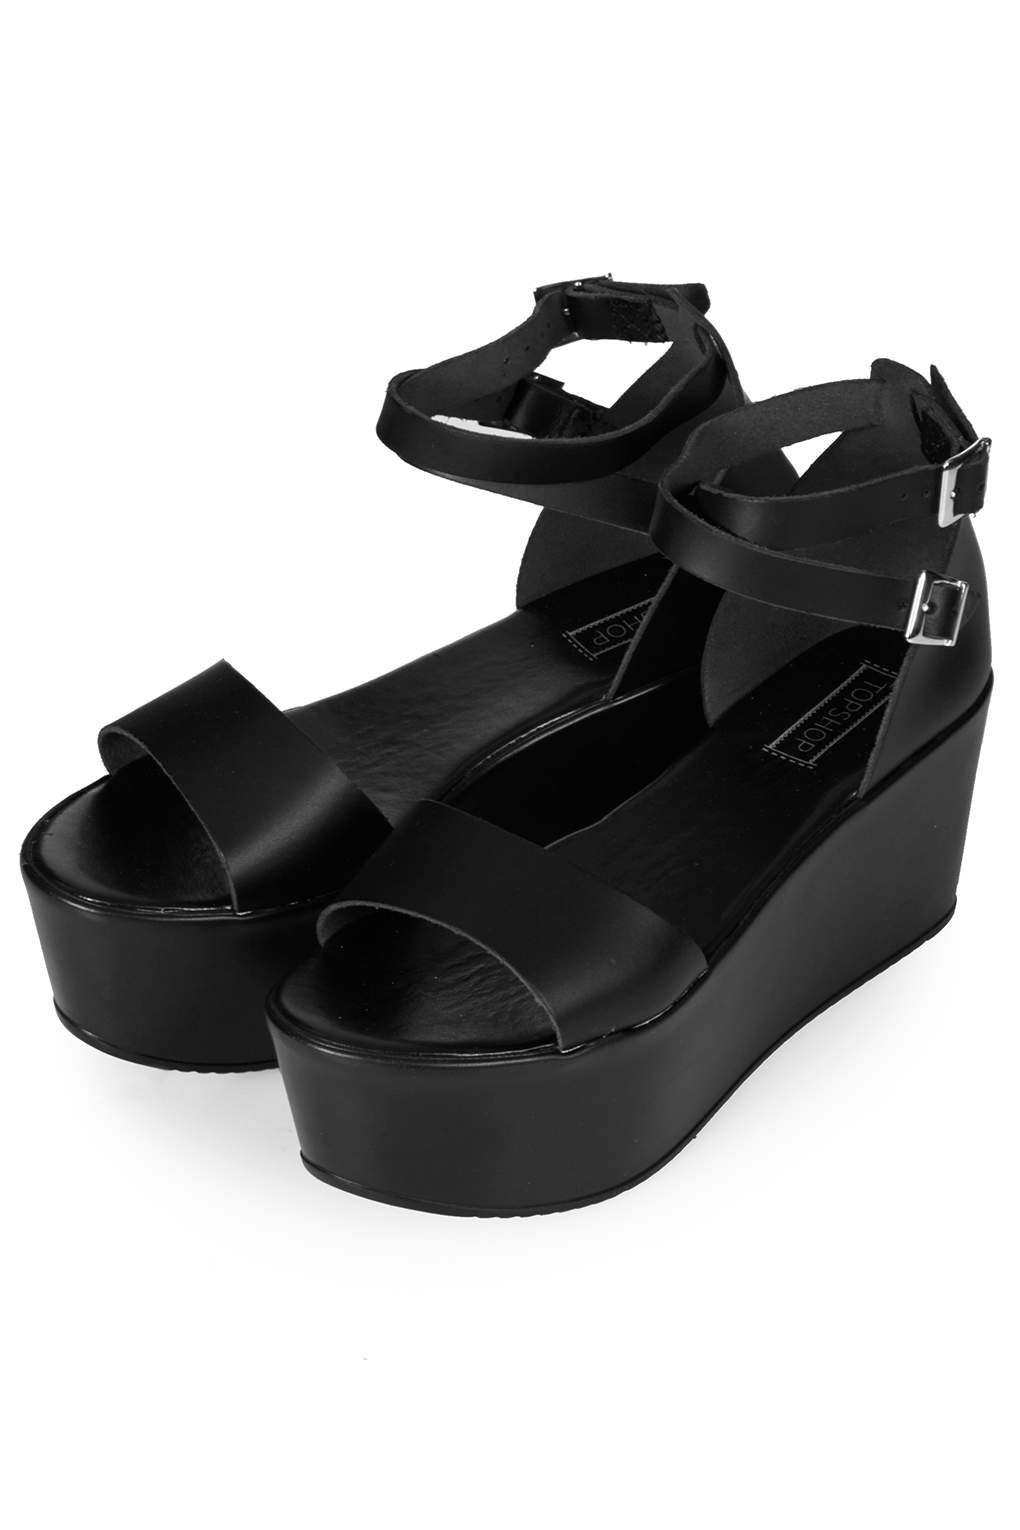 Lyst - Topshop Wallis Flatform Sandals in Black